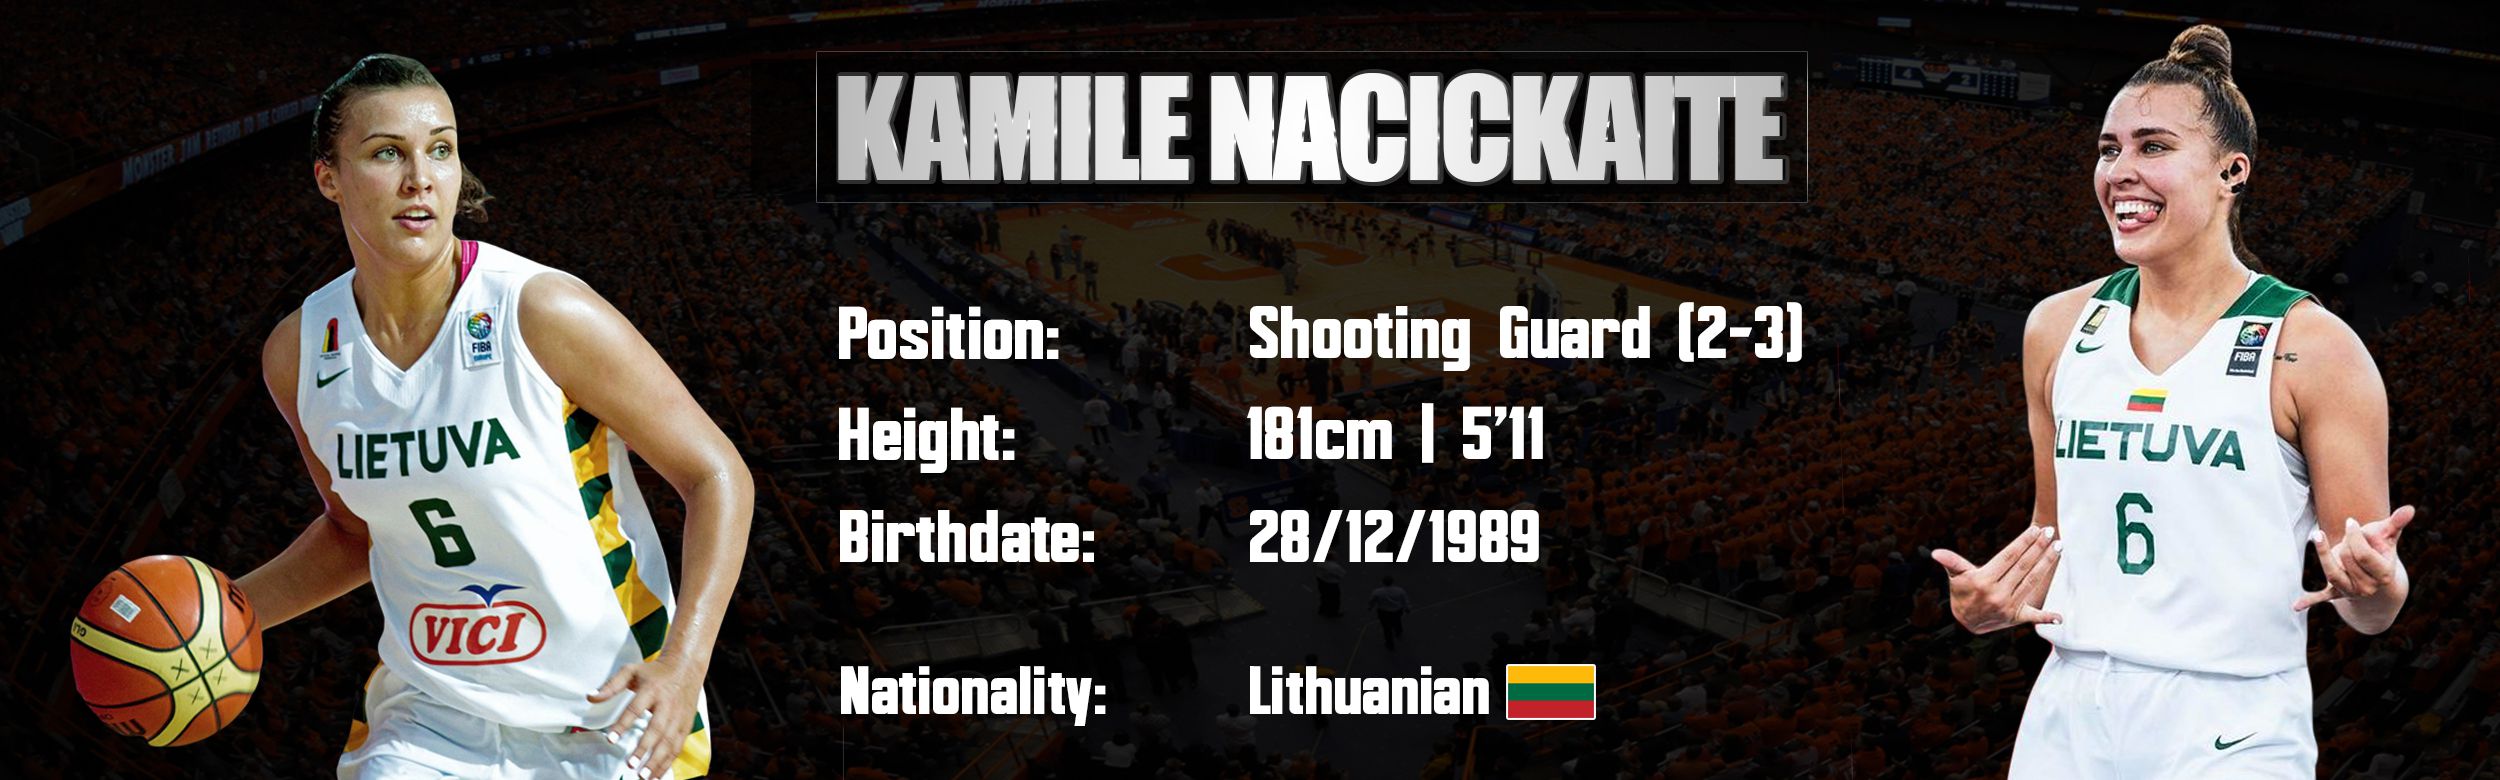 Kamile Nacickaite